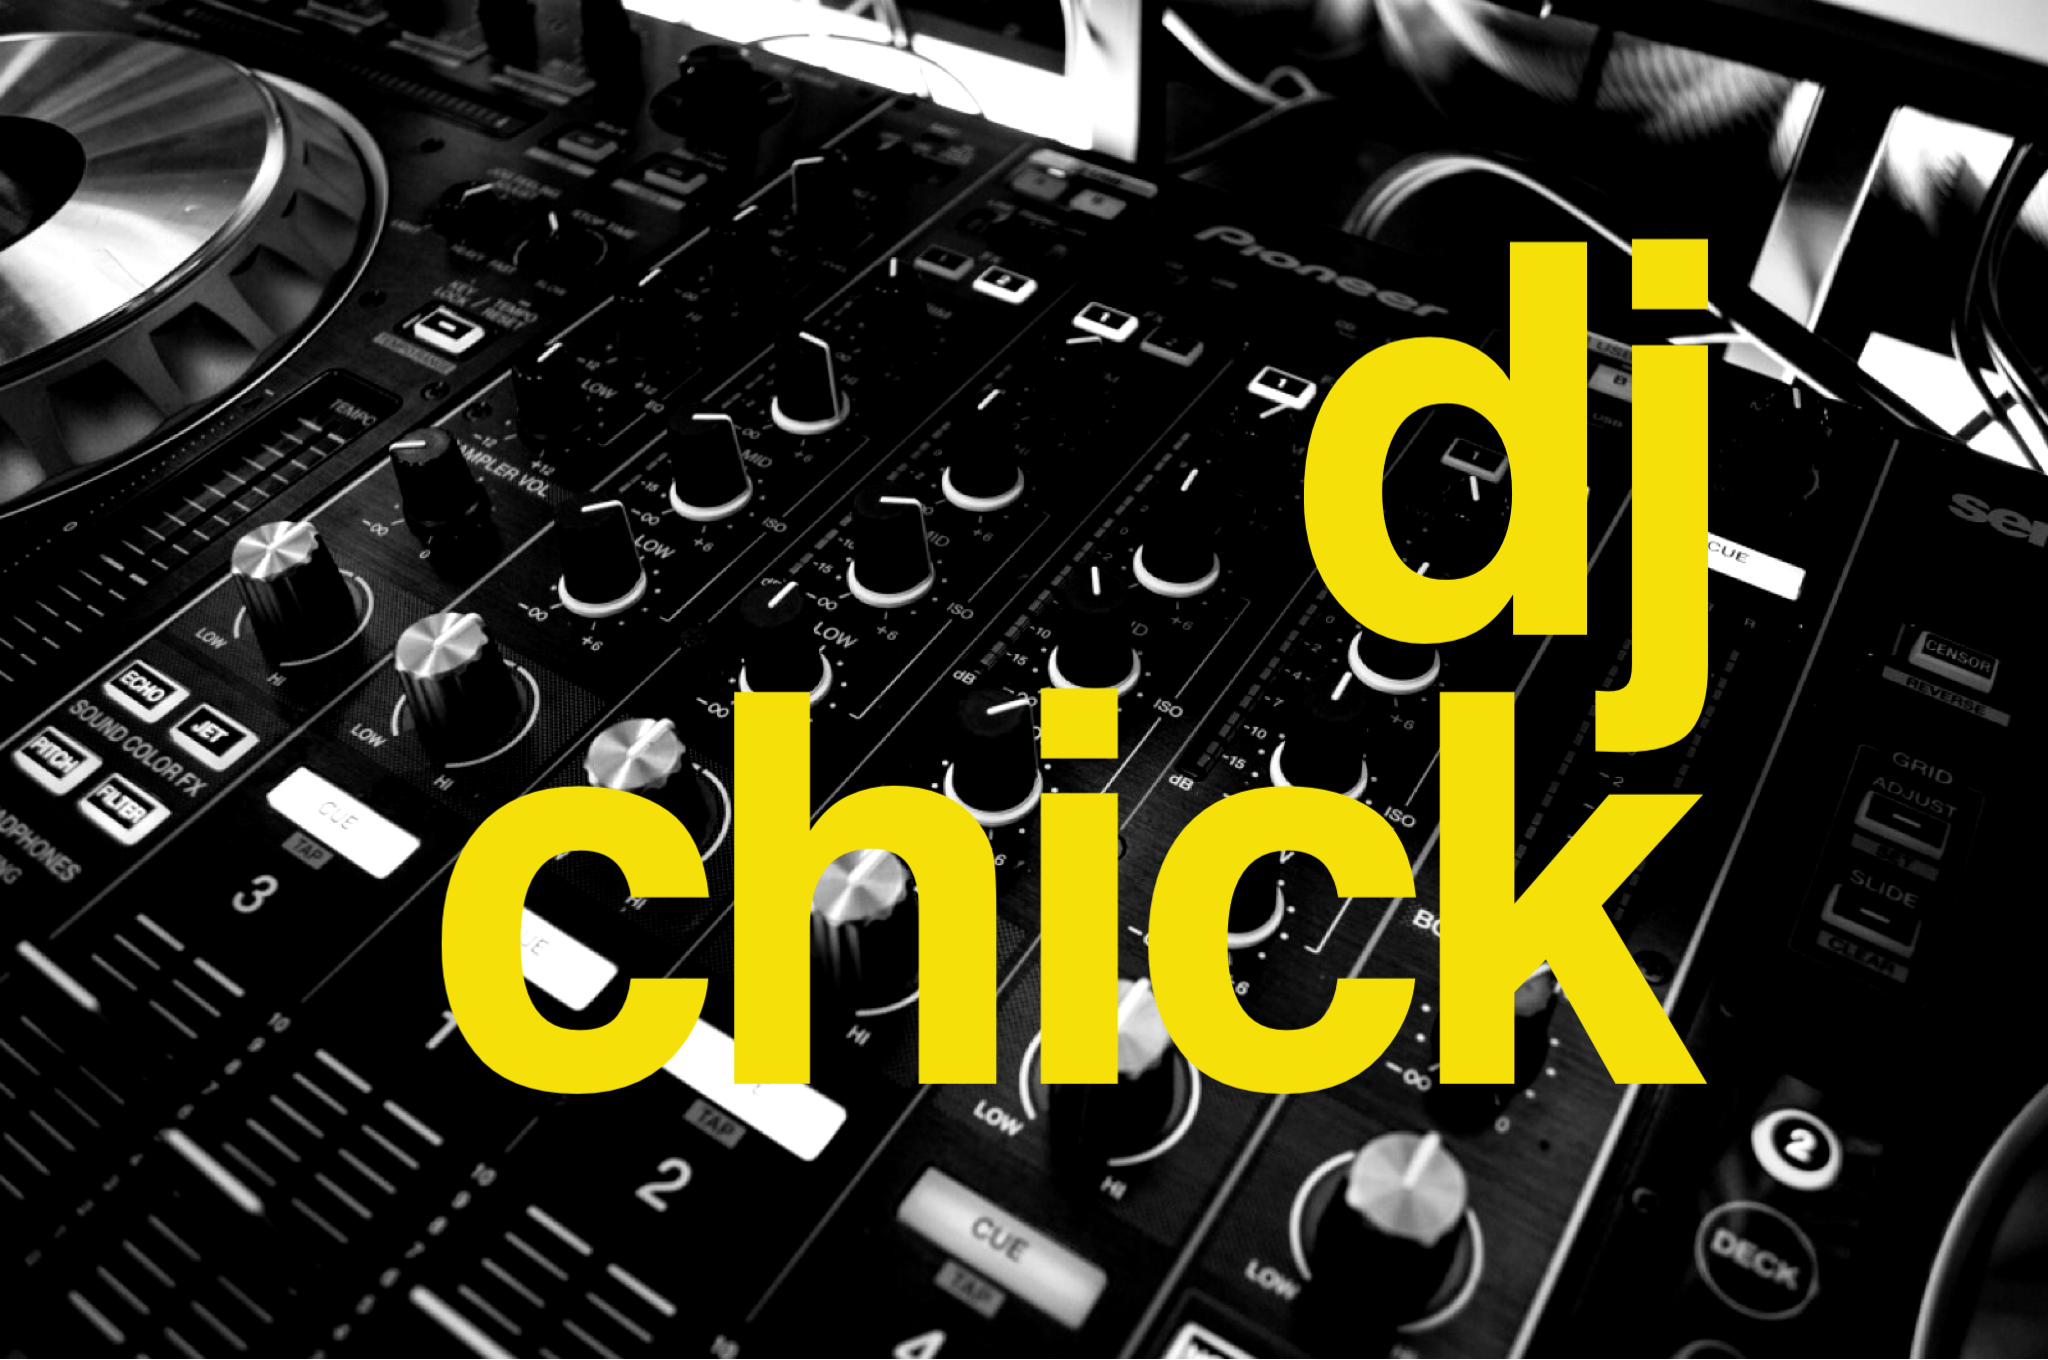 Christchurch DJ Chick